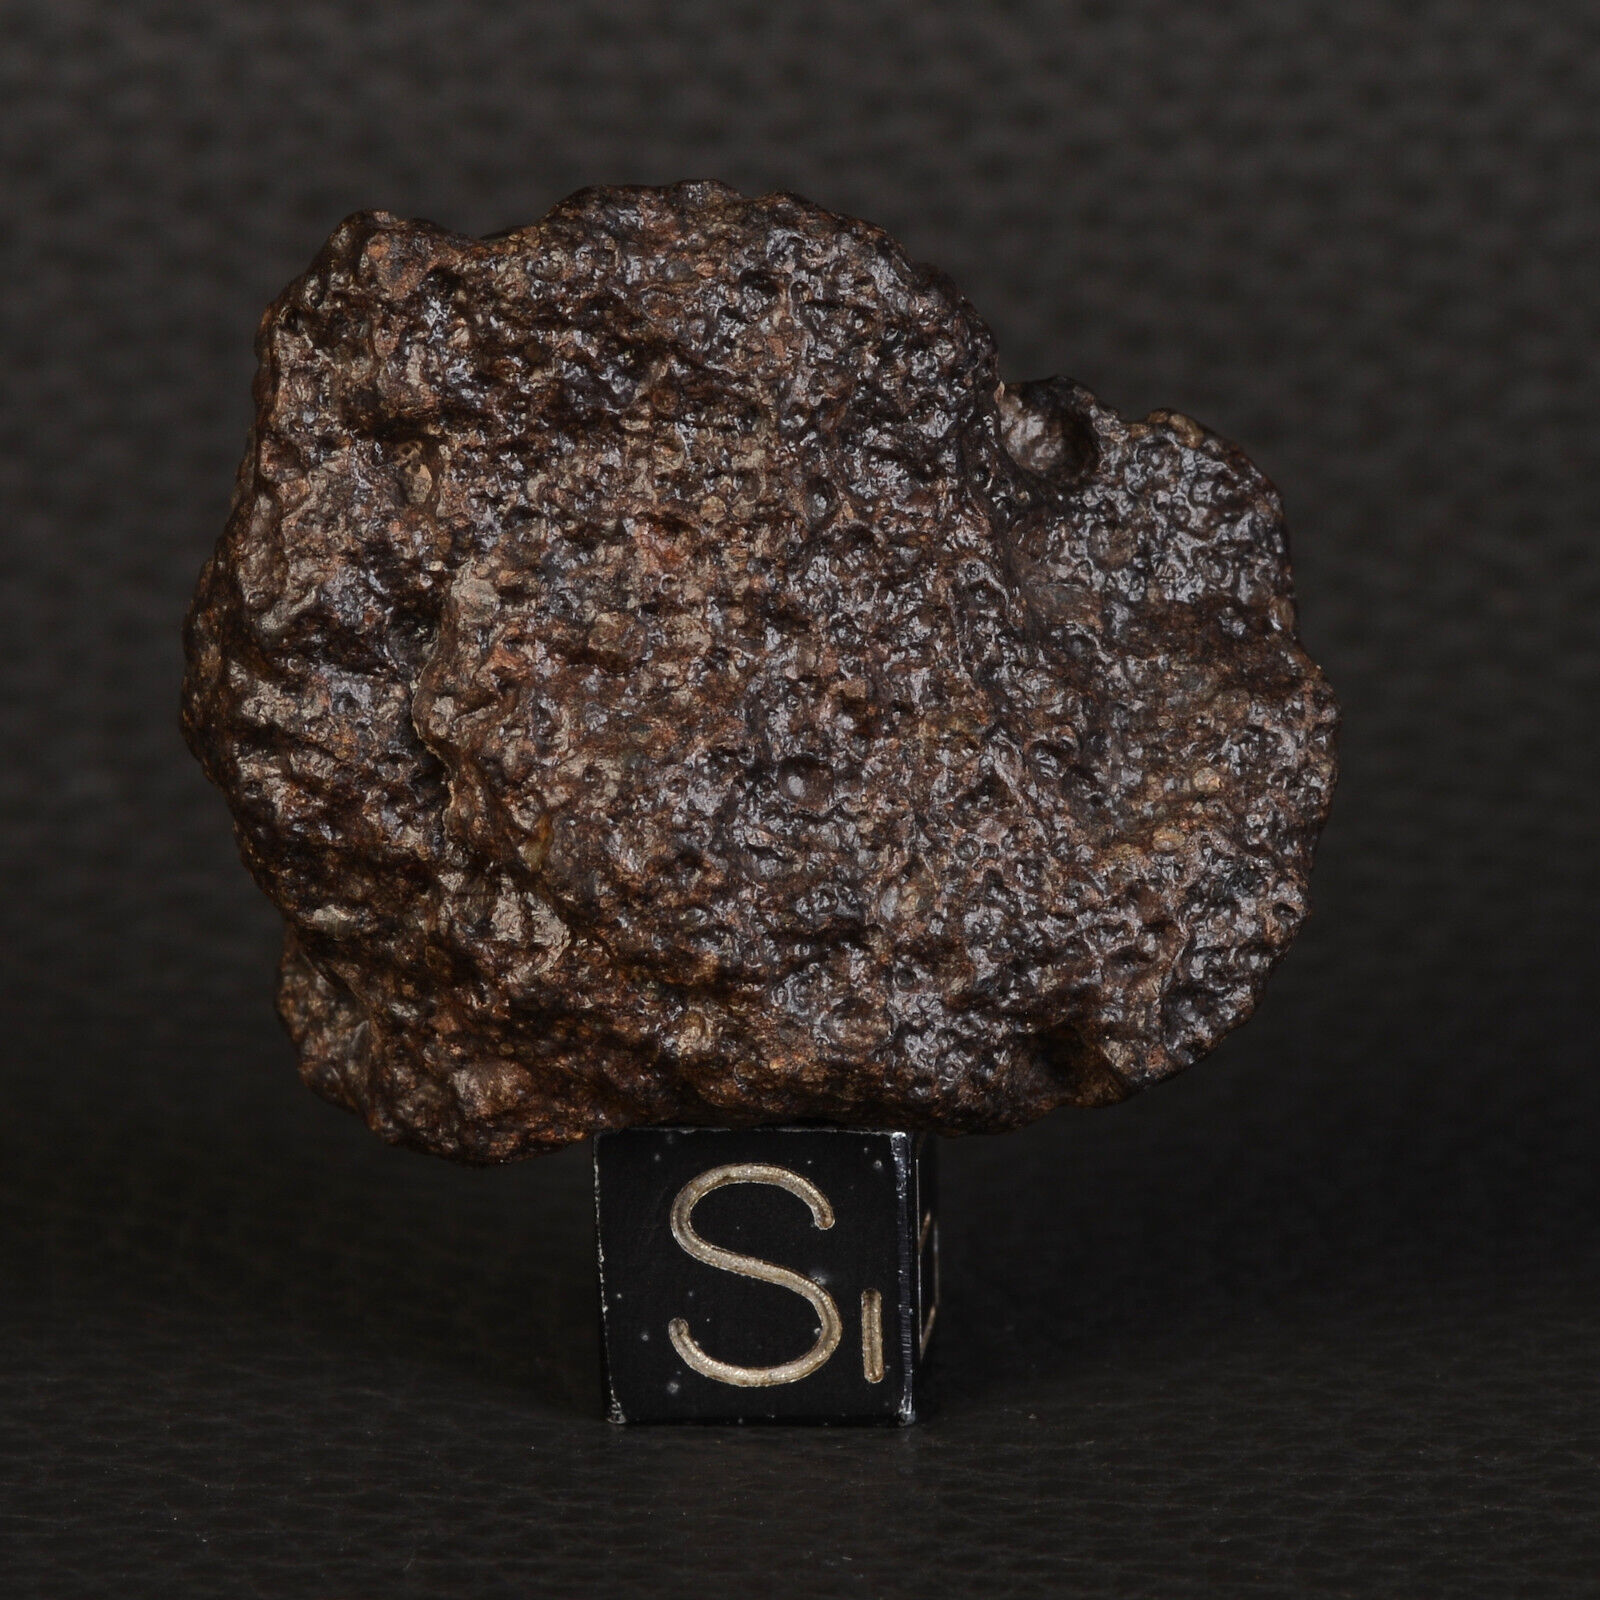 Meteorite Nwa 15729 Of 36,09 G Individual Chondrite Type LL3 D47.1-5